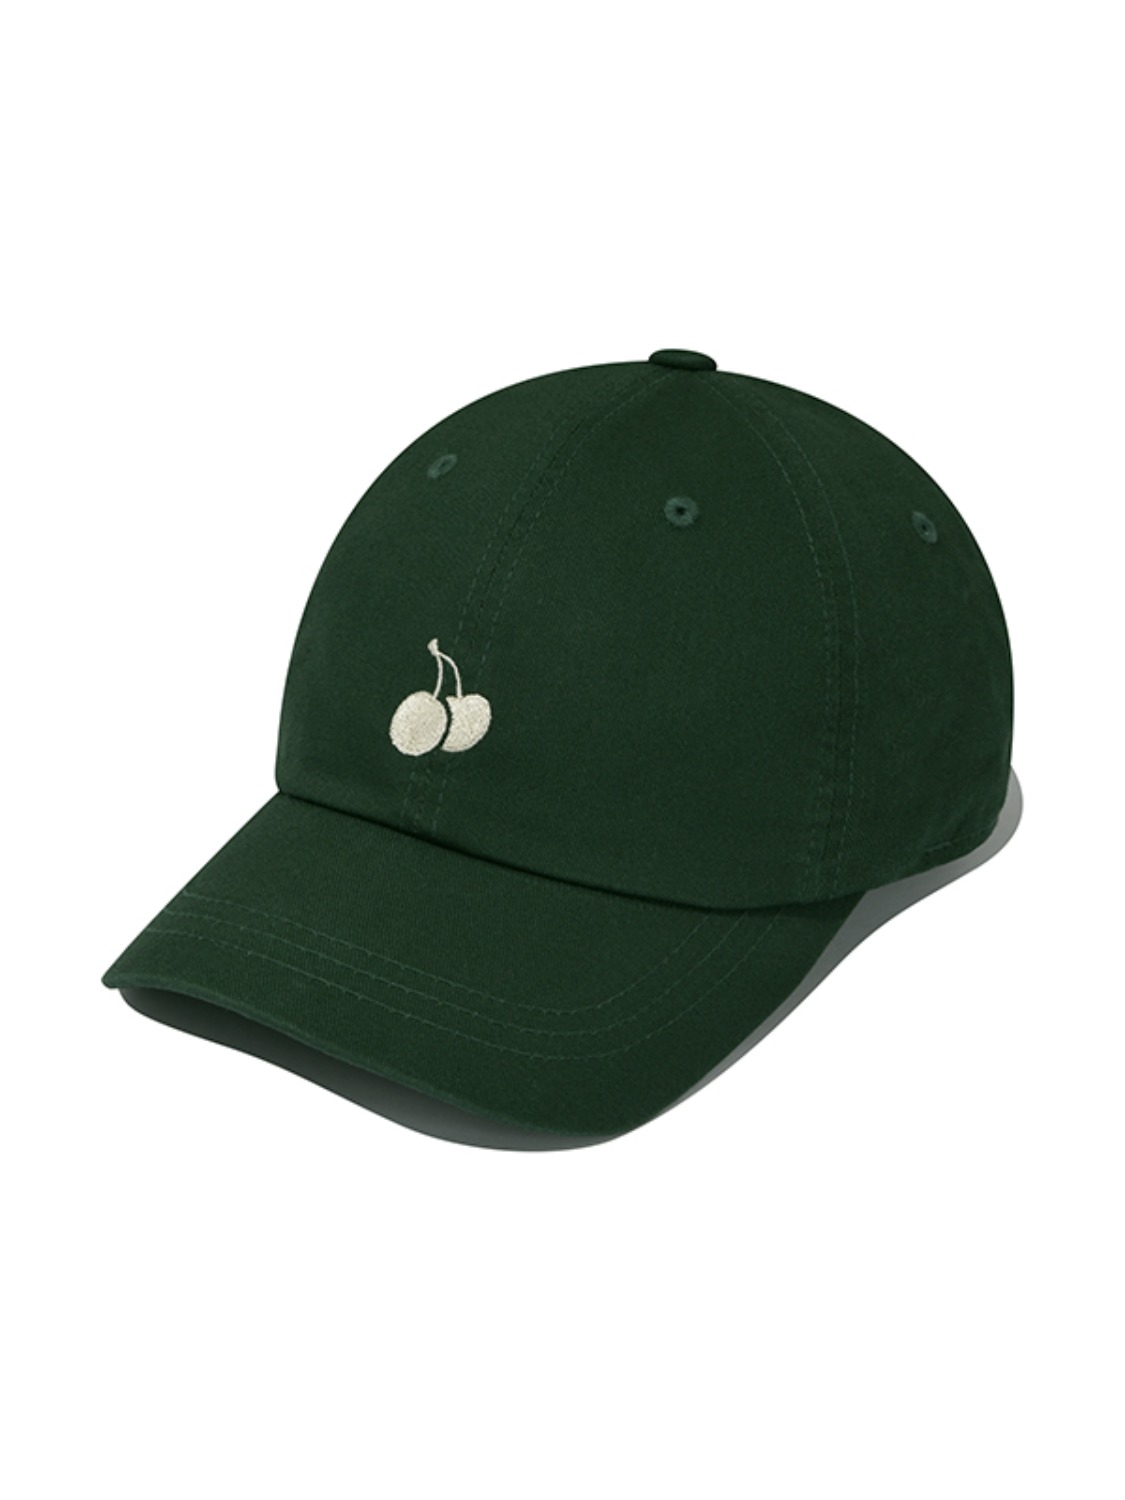 MONO CHERRY LOGO BALL CAP [DARK GREEN]